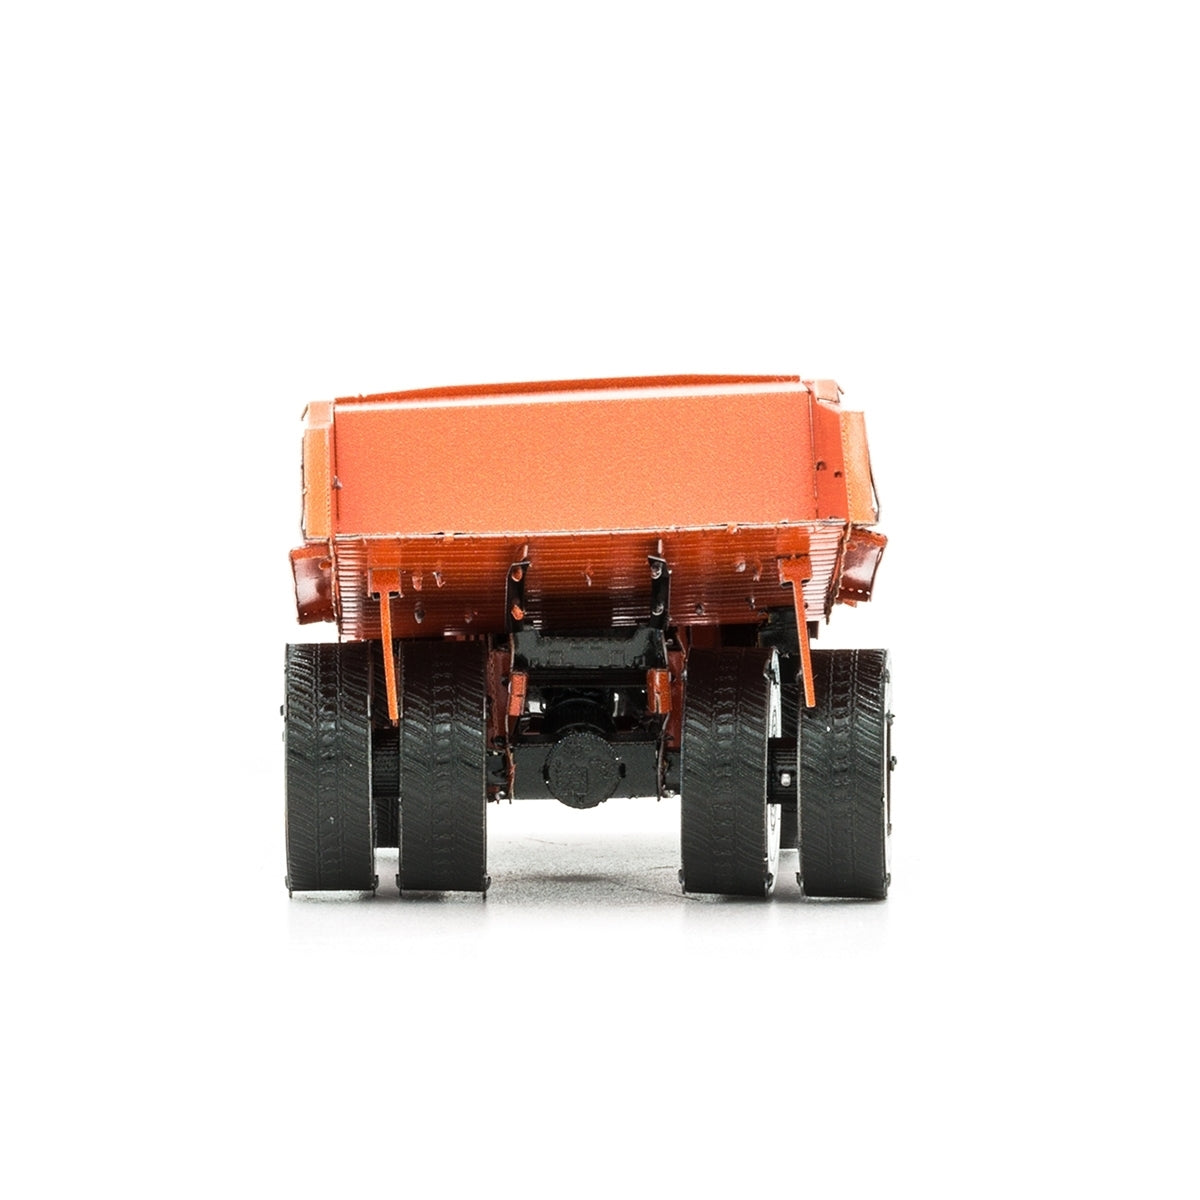 Metal Earth - Construction - Mining Truck model kit